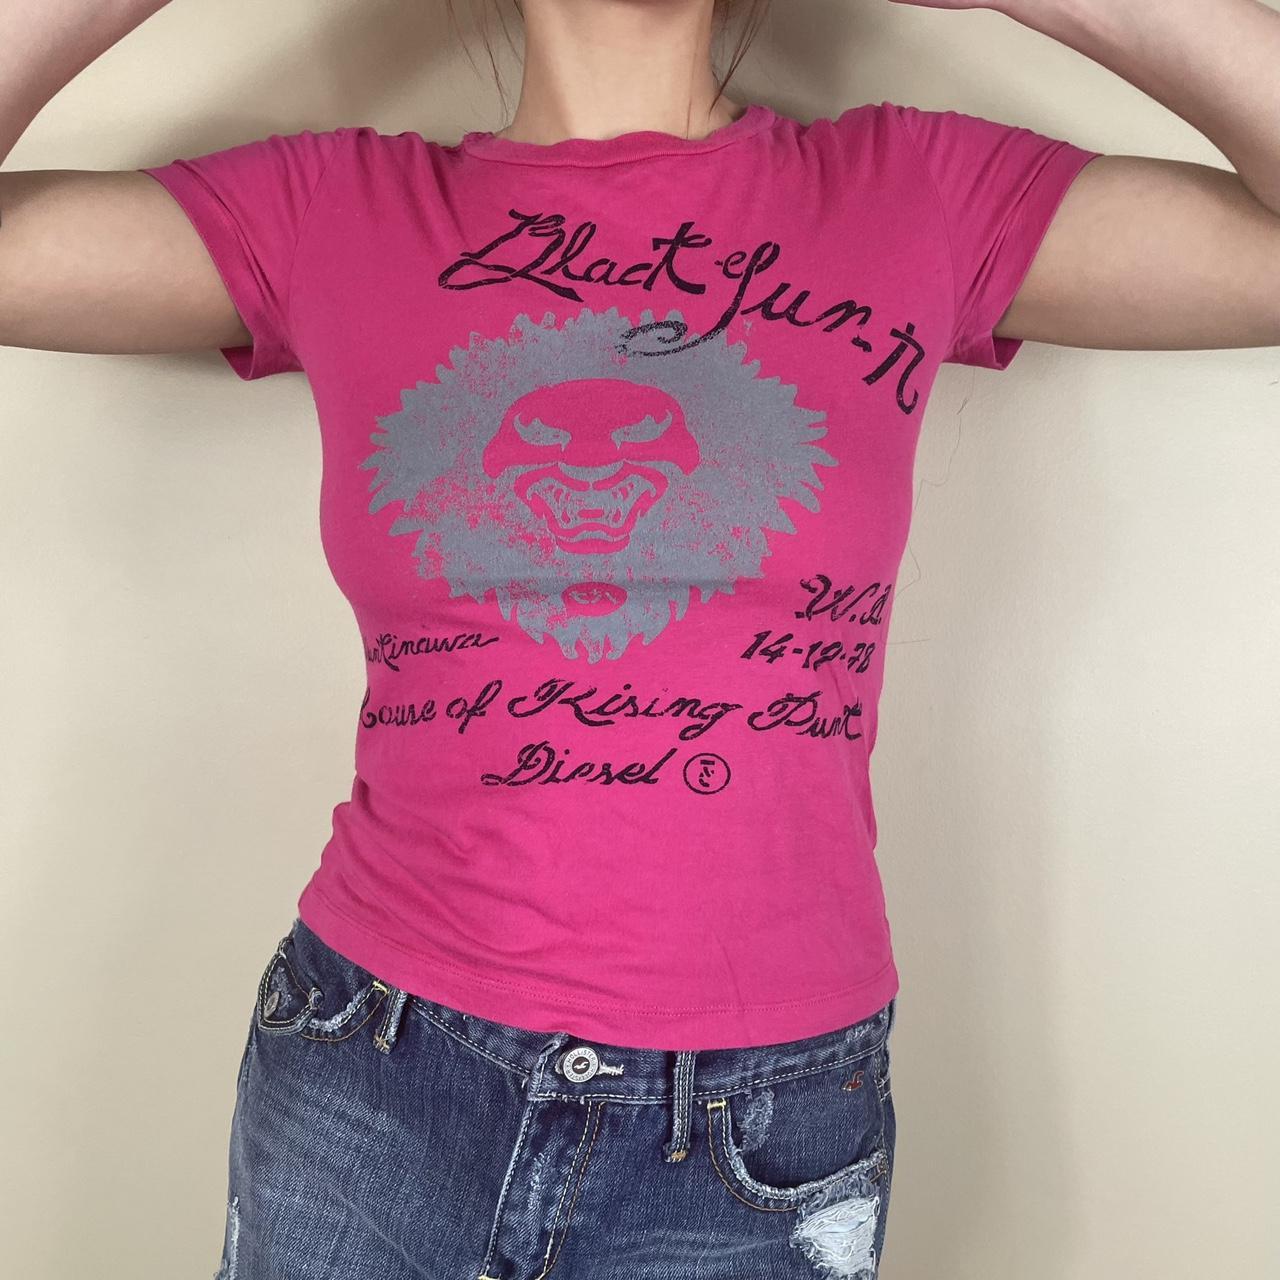 Diesel Women's Pink and Black T-shirt | Depop